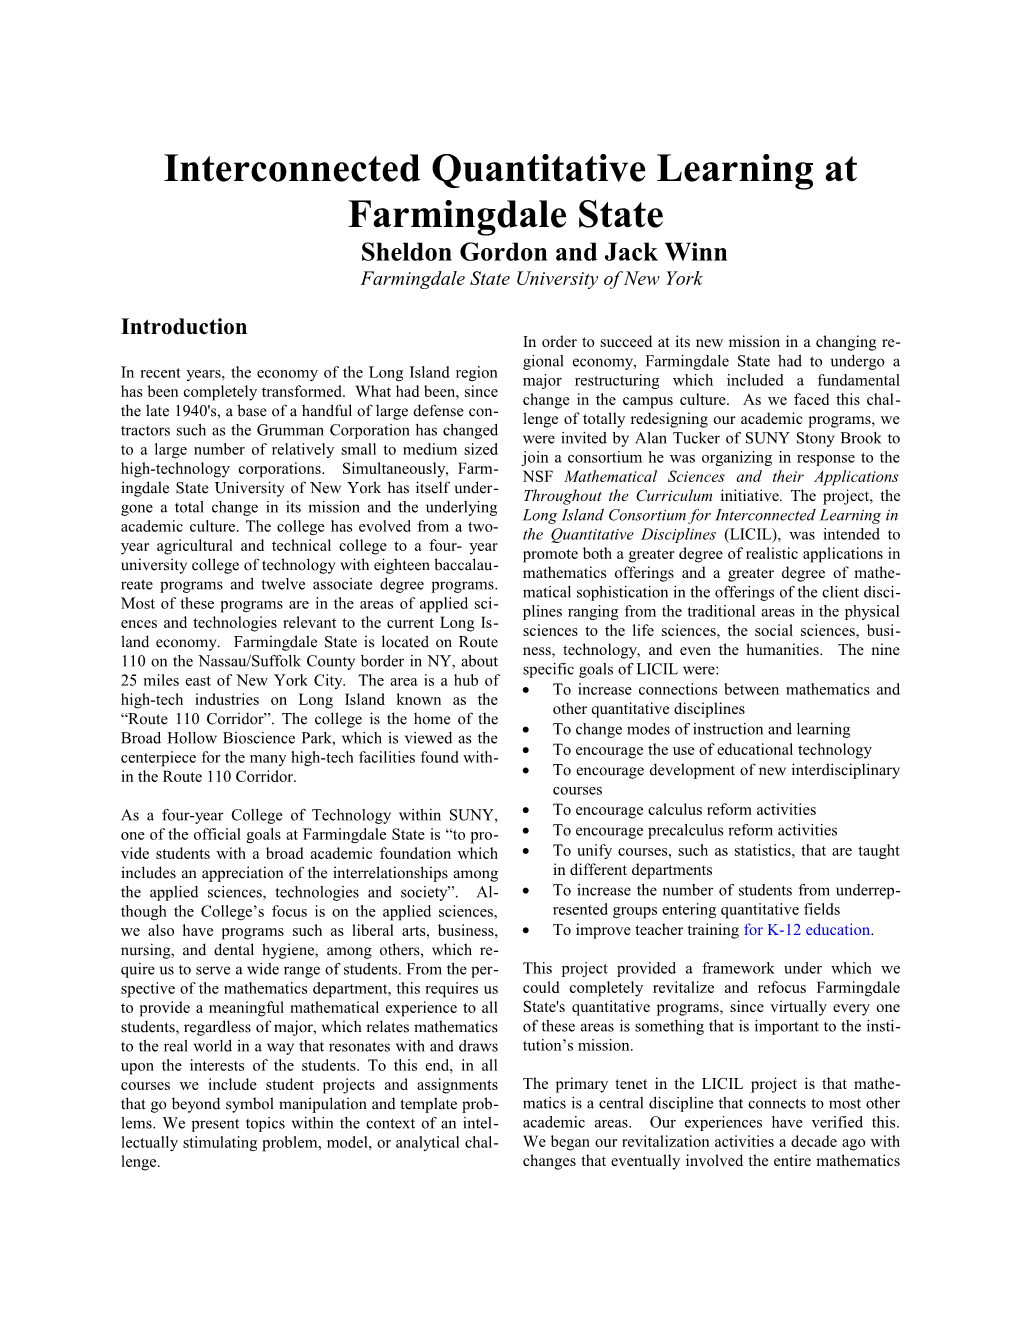 Interconnected Quantitative Learning at Farmingdale State University